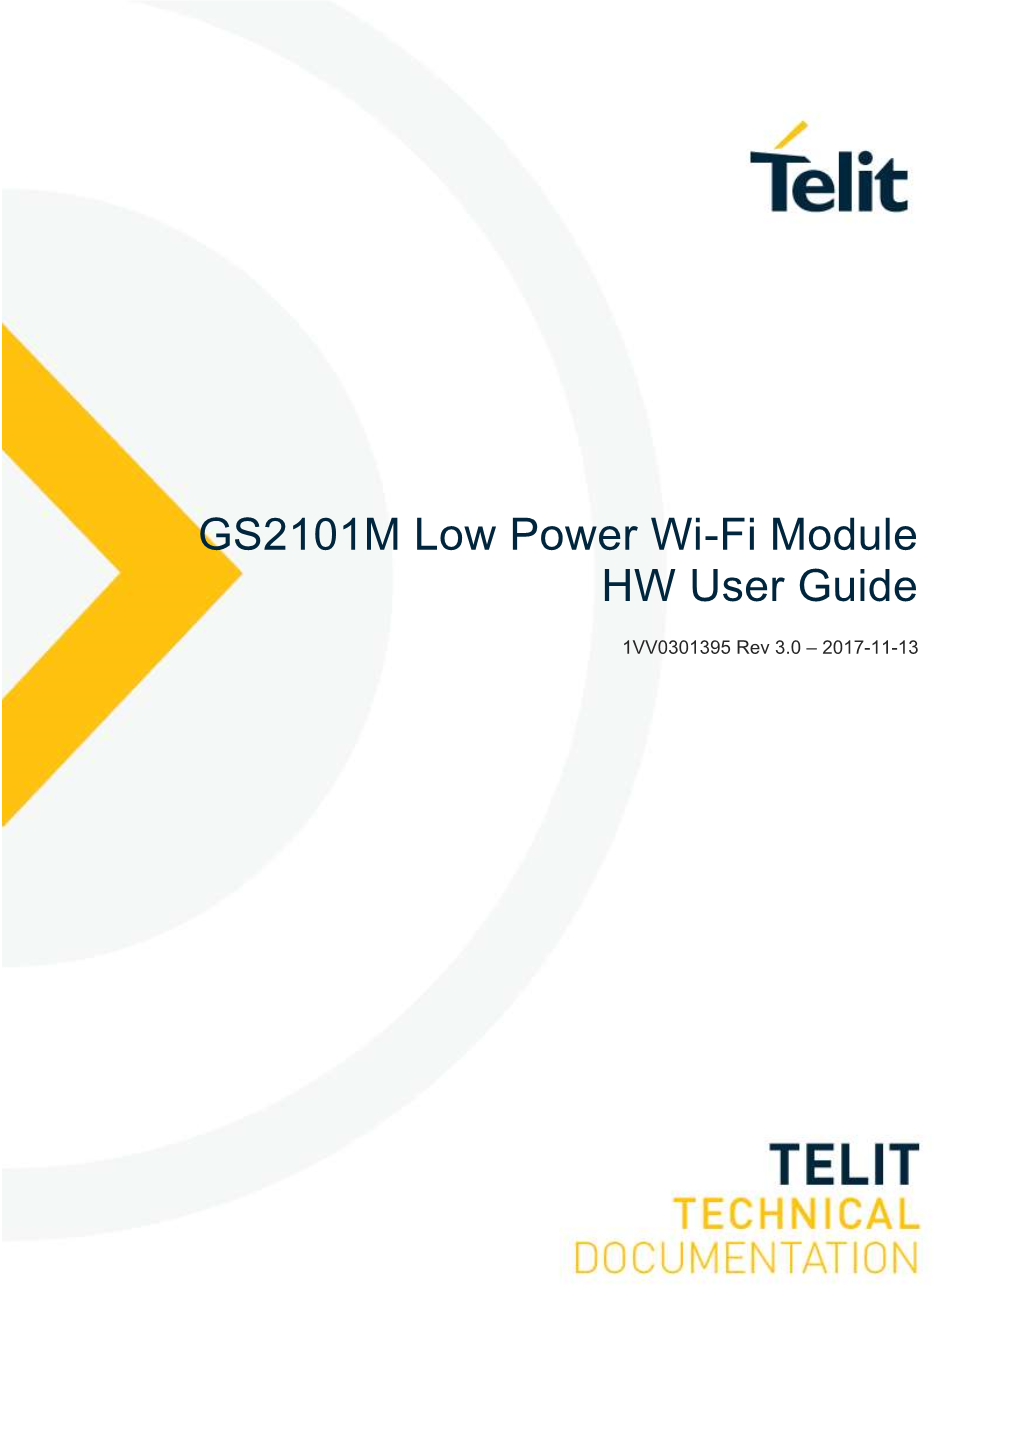 GS2101M Low Power Wi-Fi Module Hardware User Guide